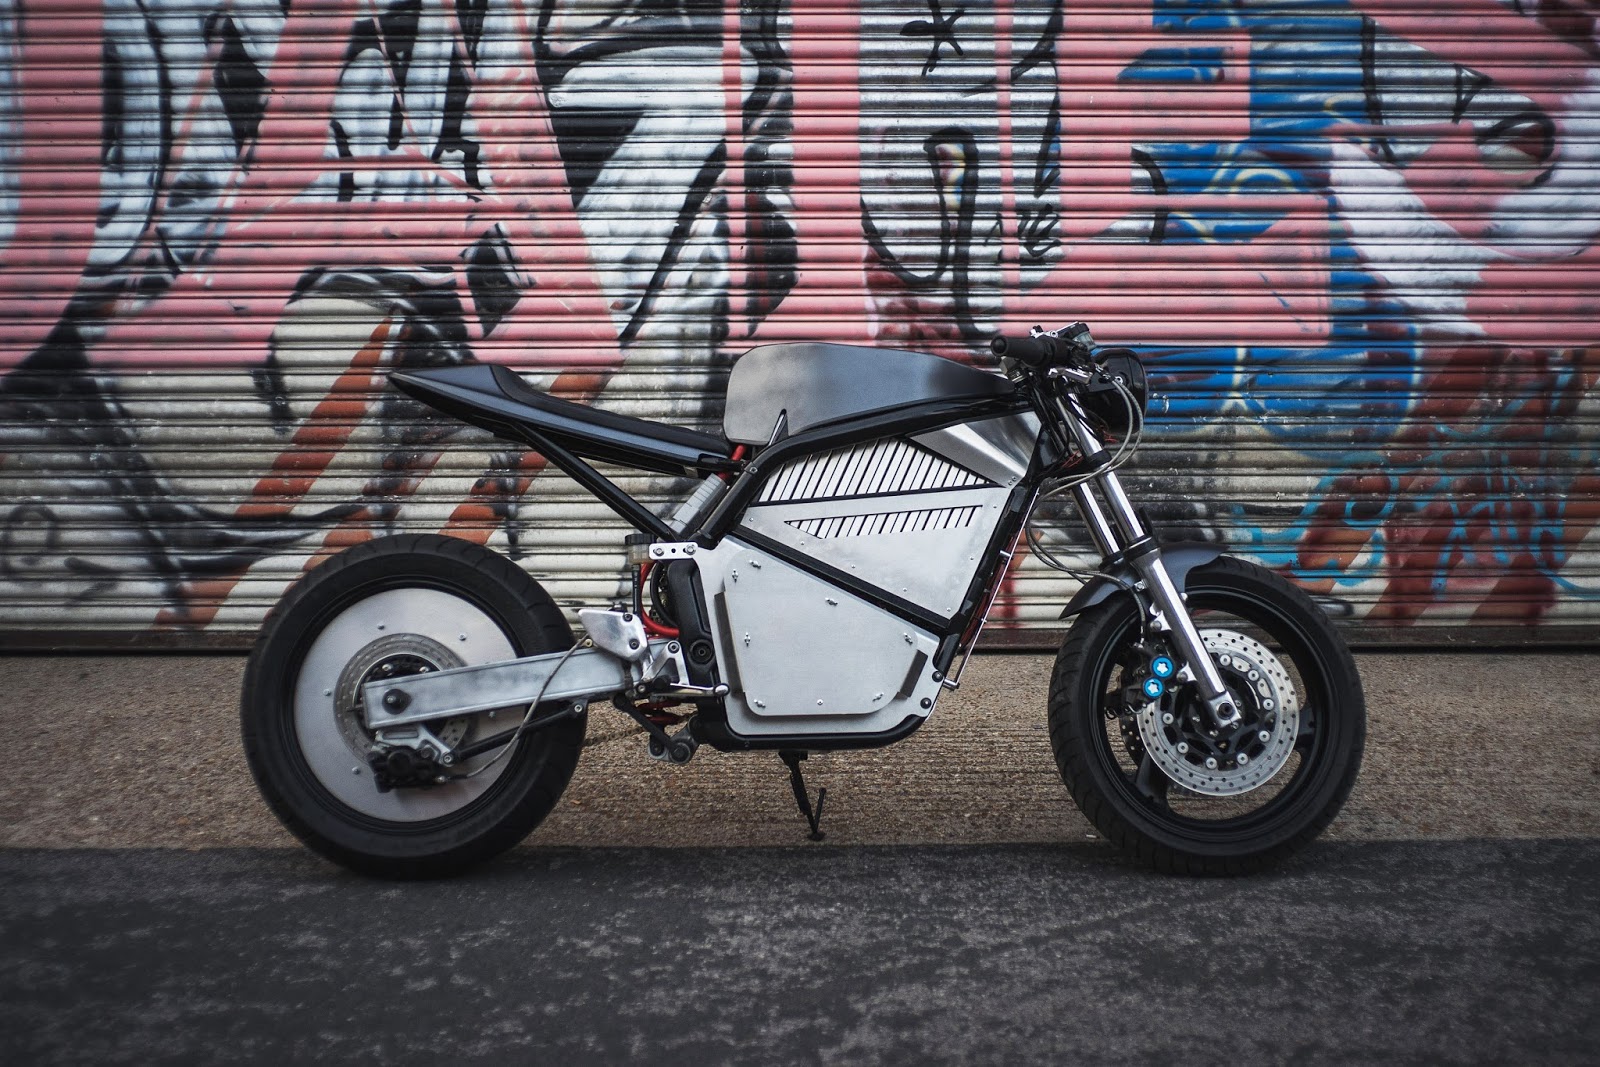 Yamaha Fazer electric motorcycle